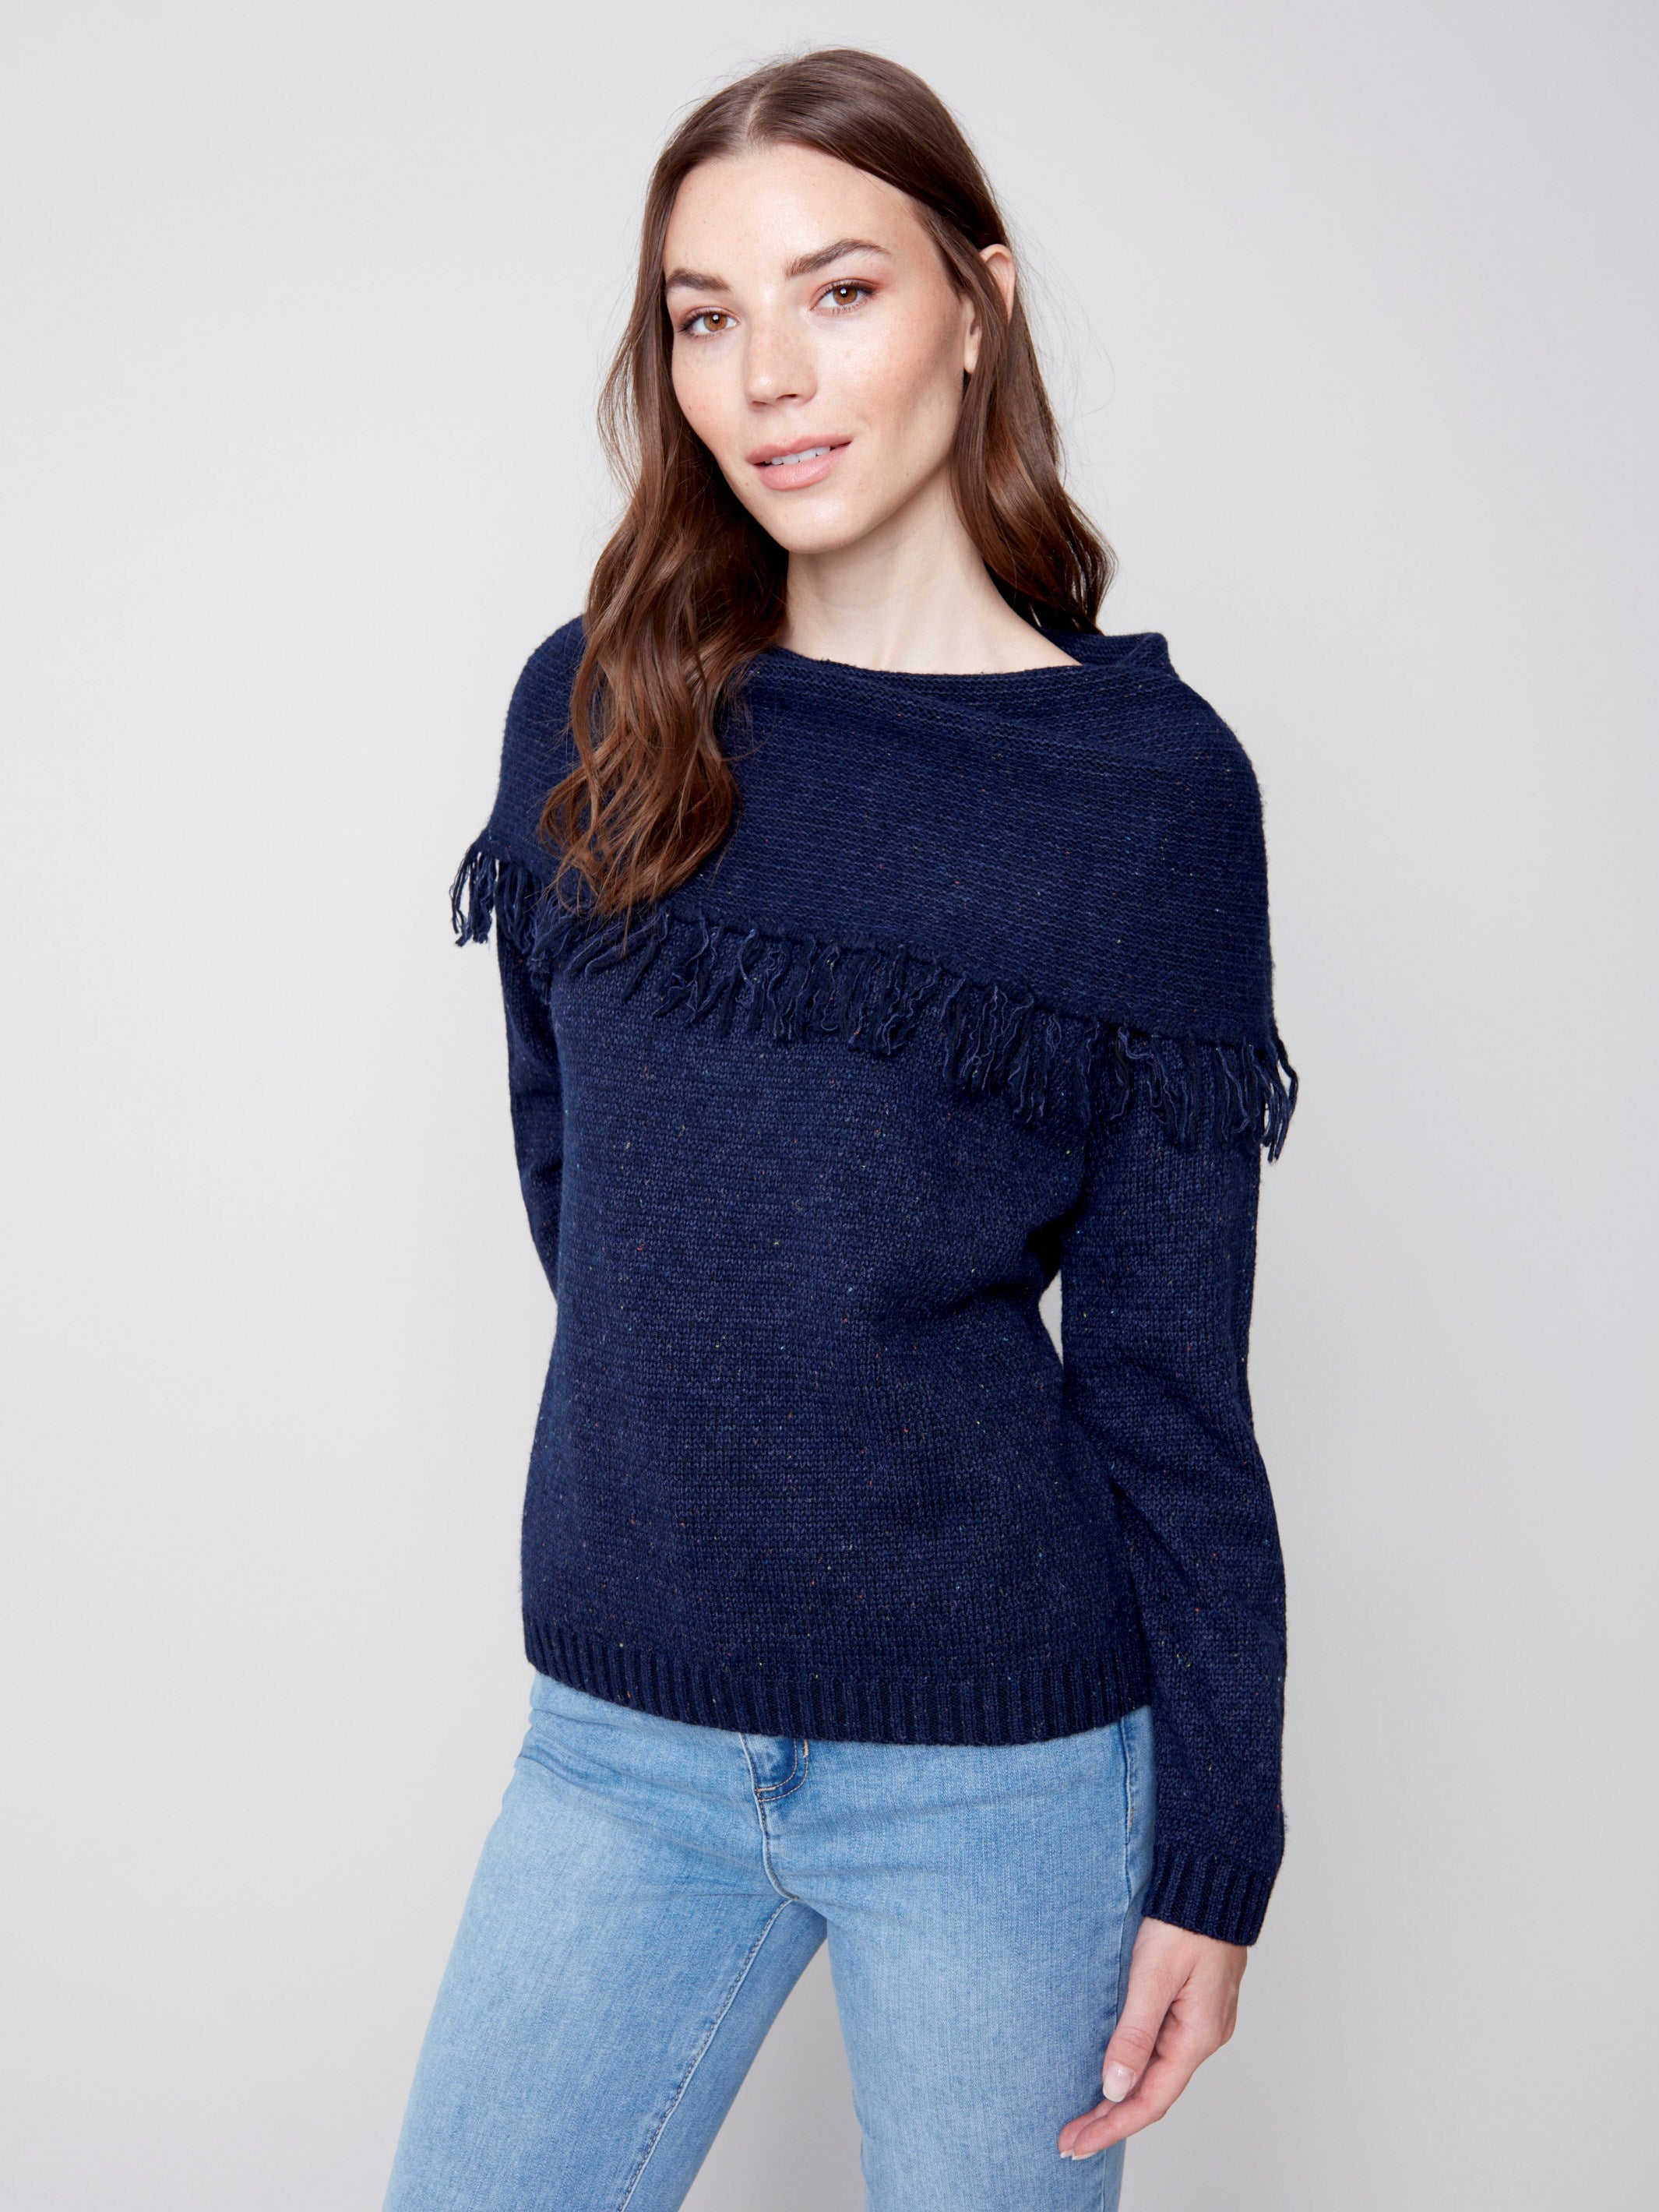 Fringed Cowl Neck Sweater - Denim